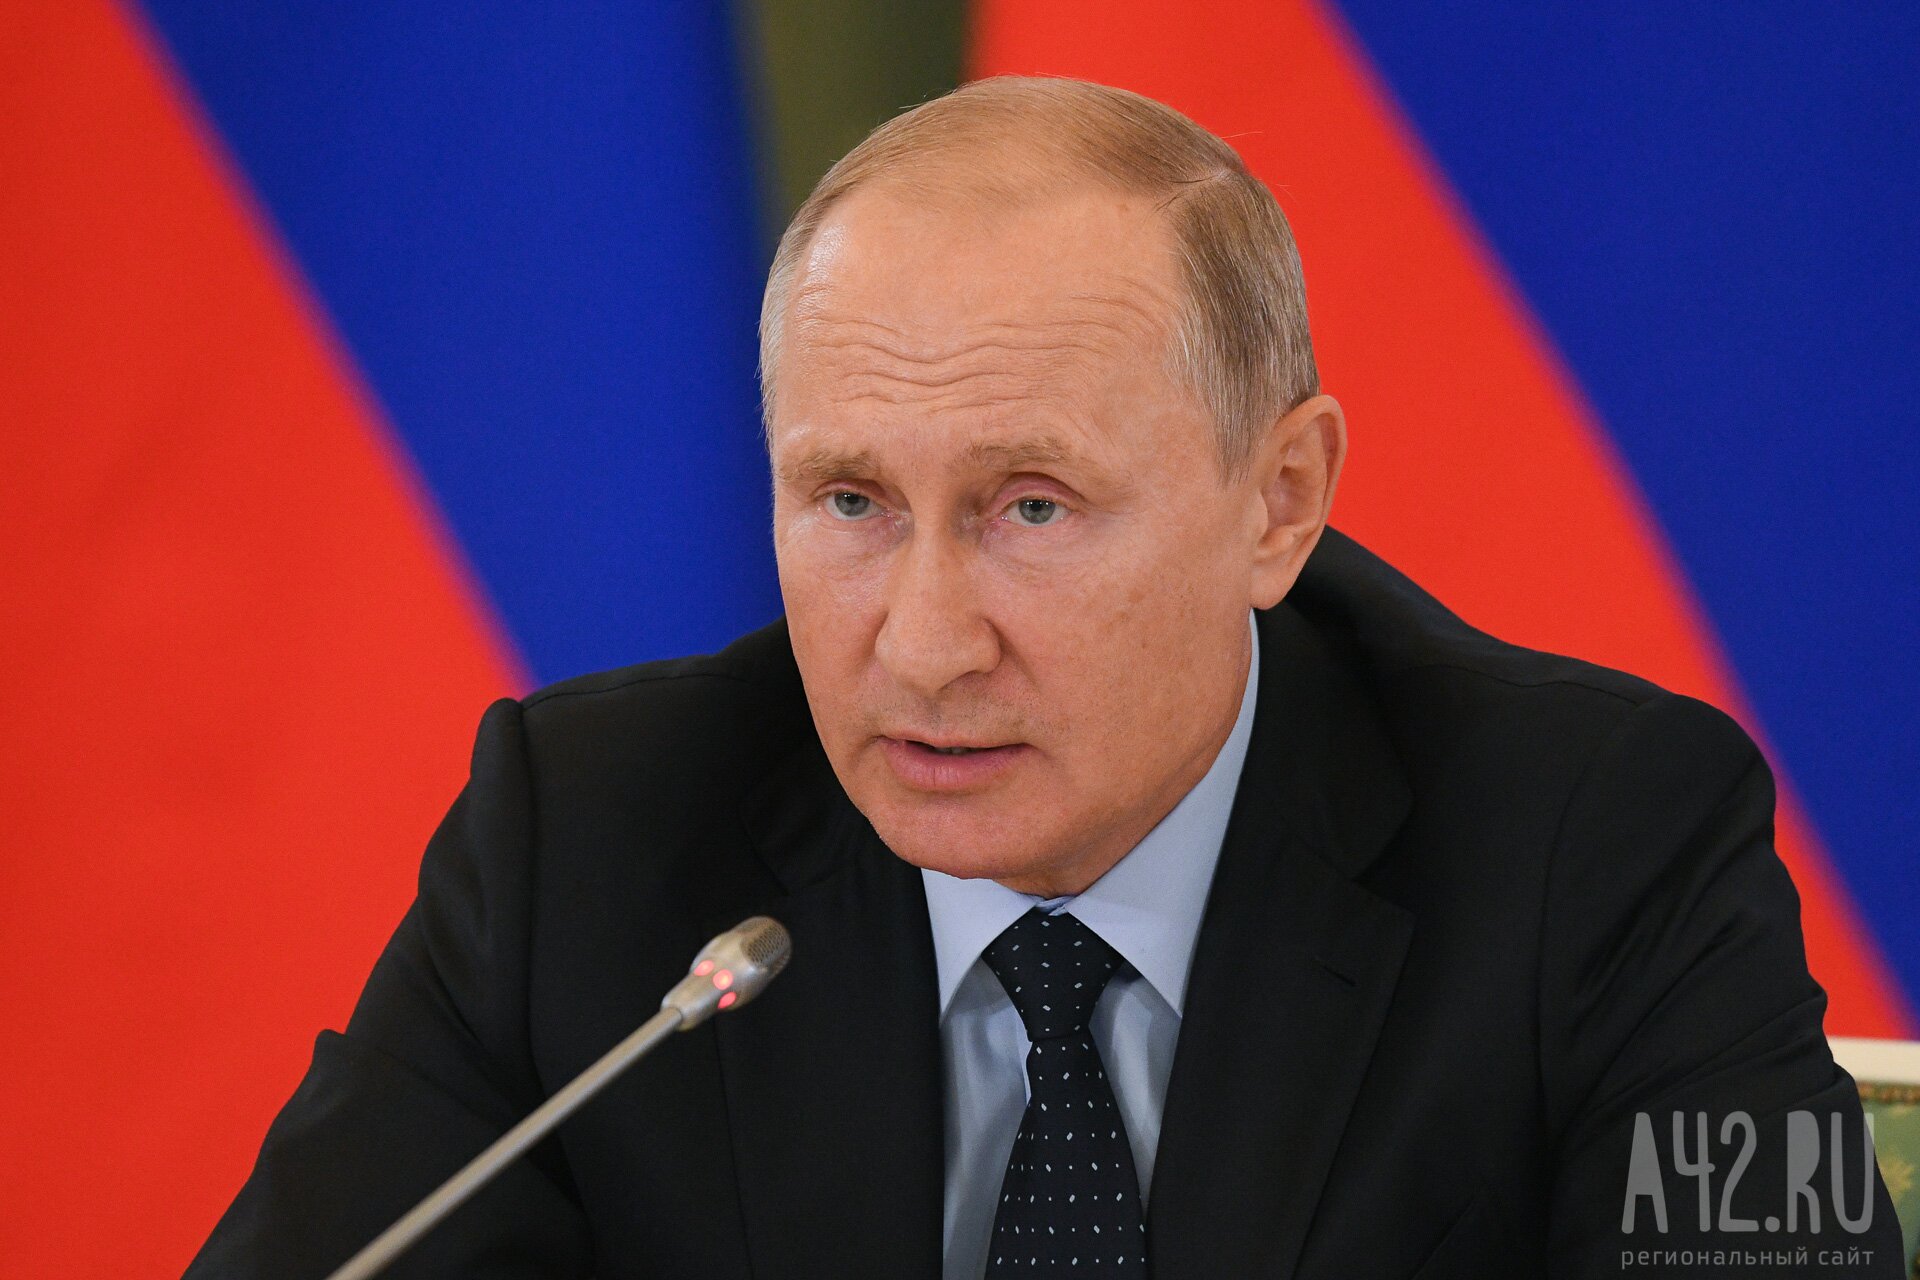 Путин внёс в Госдуму кандидатуру Мишустина на пост премьер-министра РФ